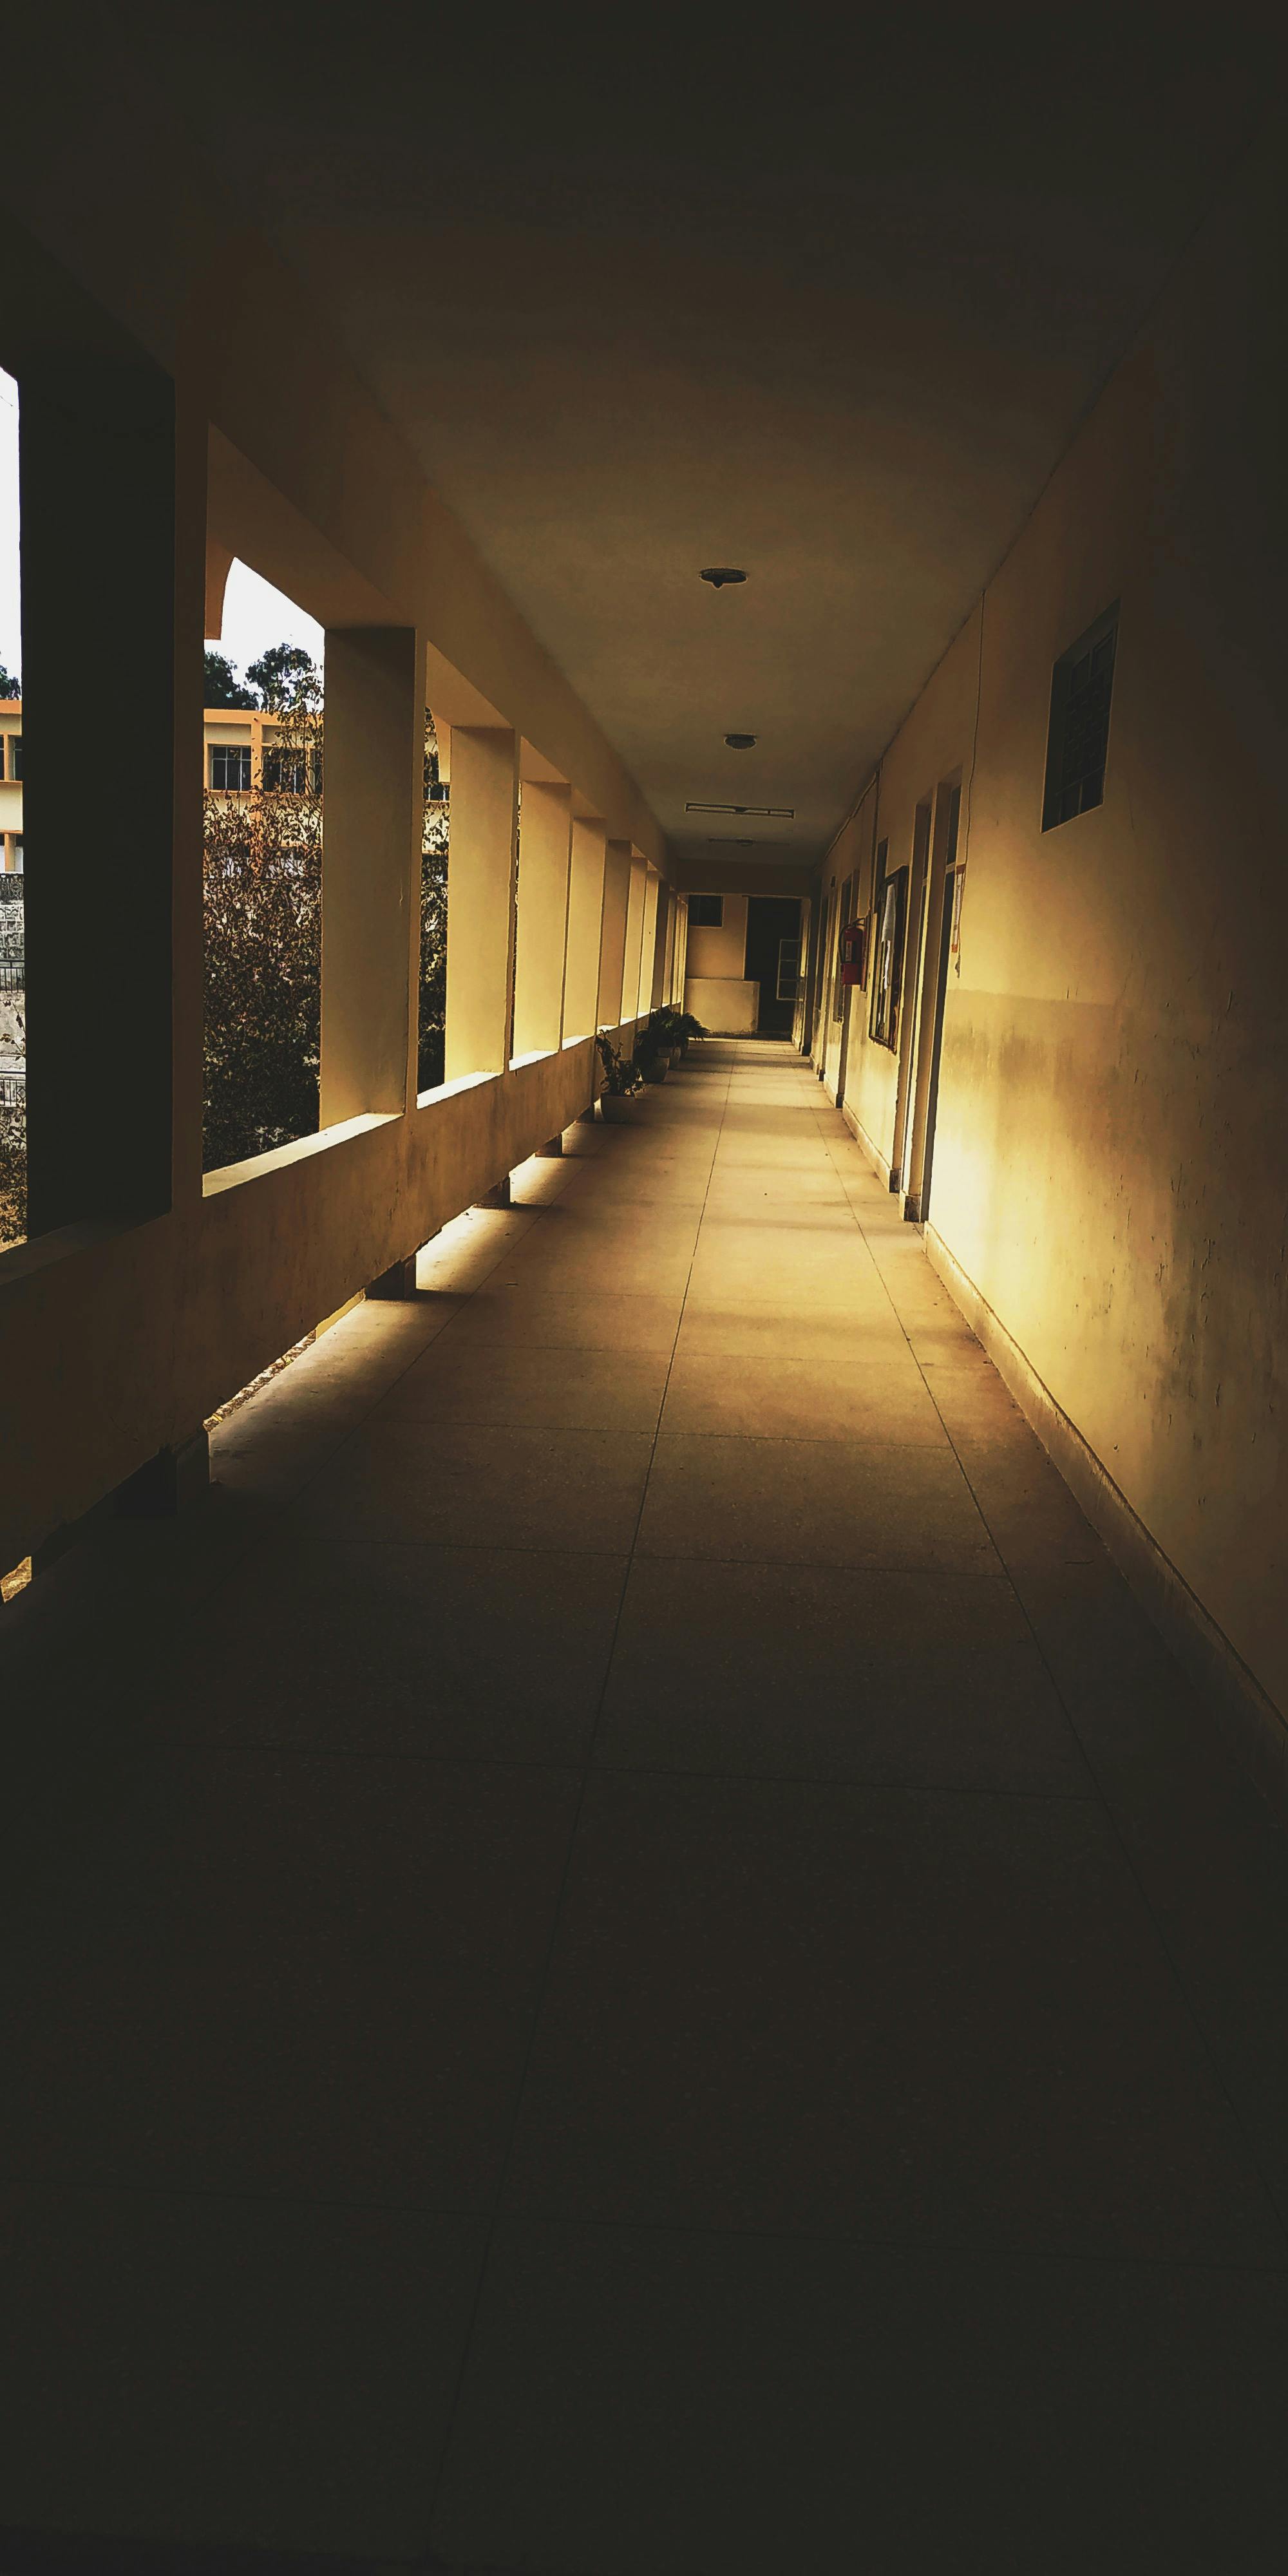 Free stock photo of corridor, darkness, nostalgic